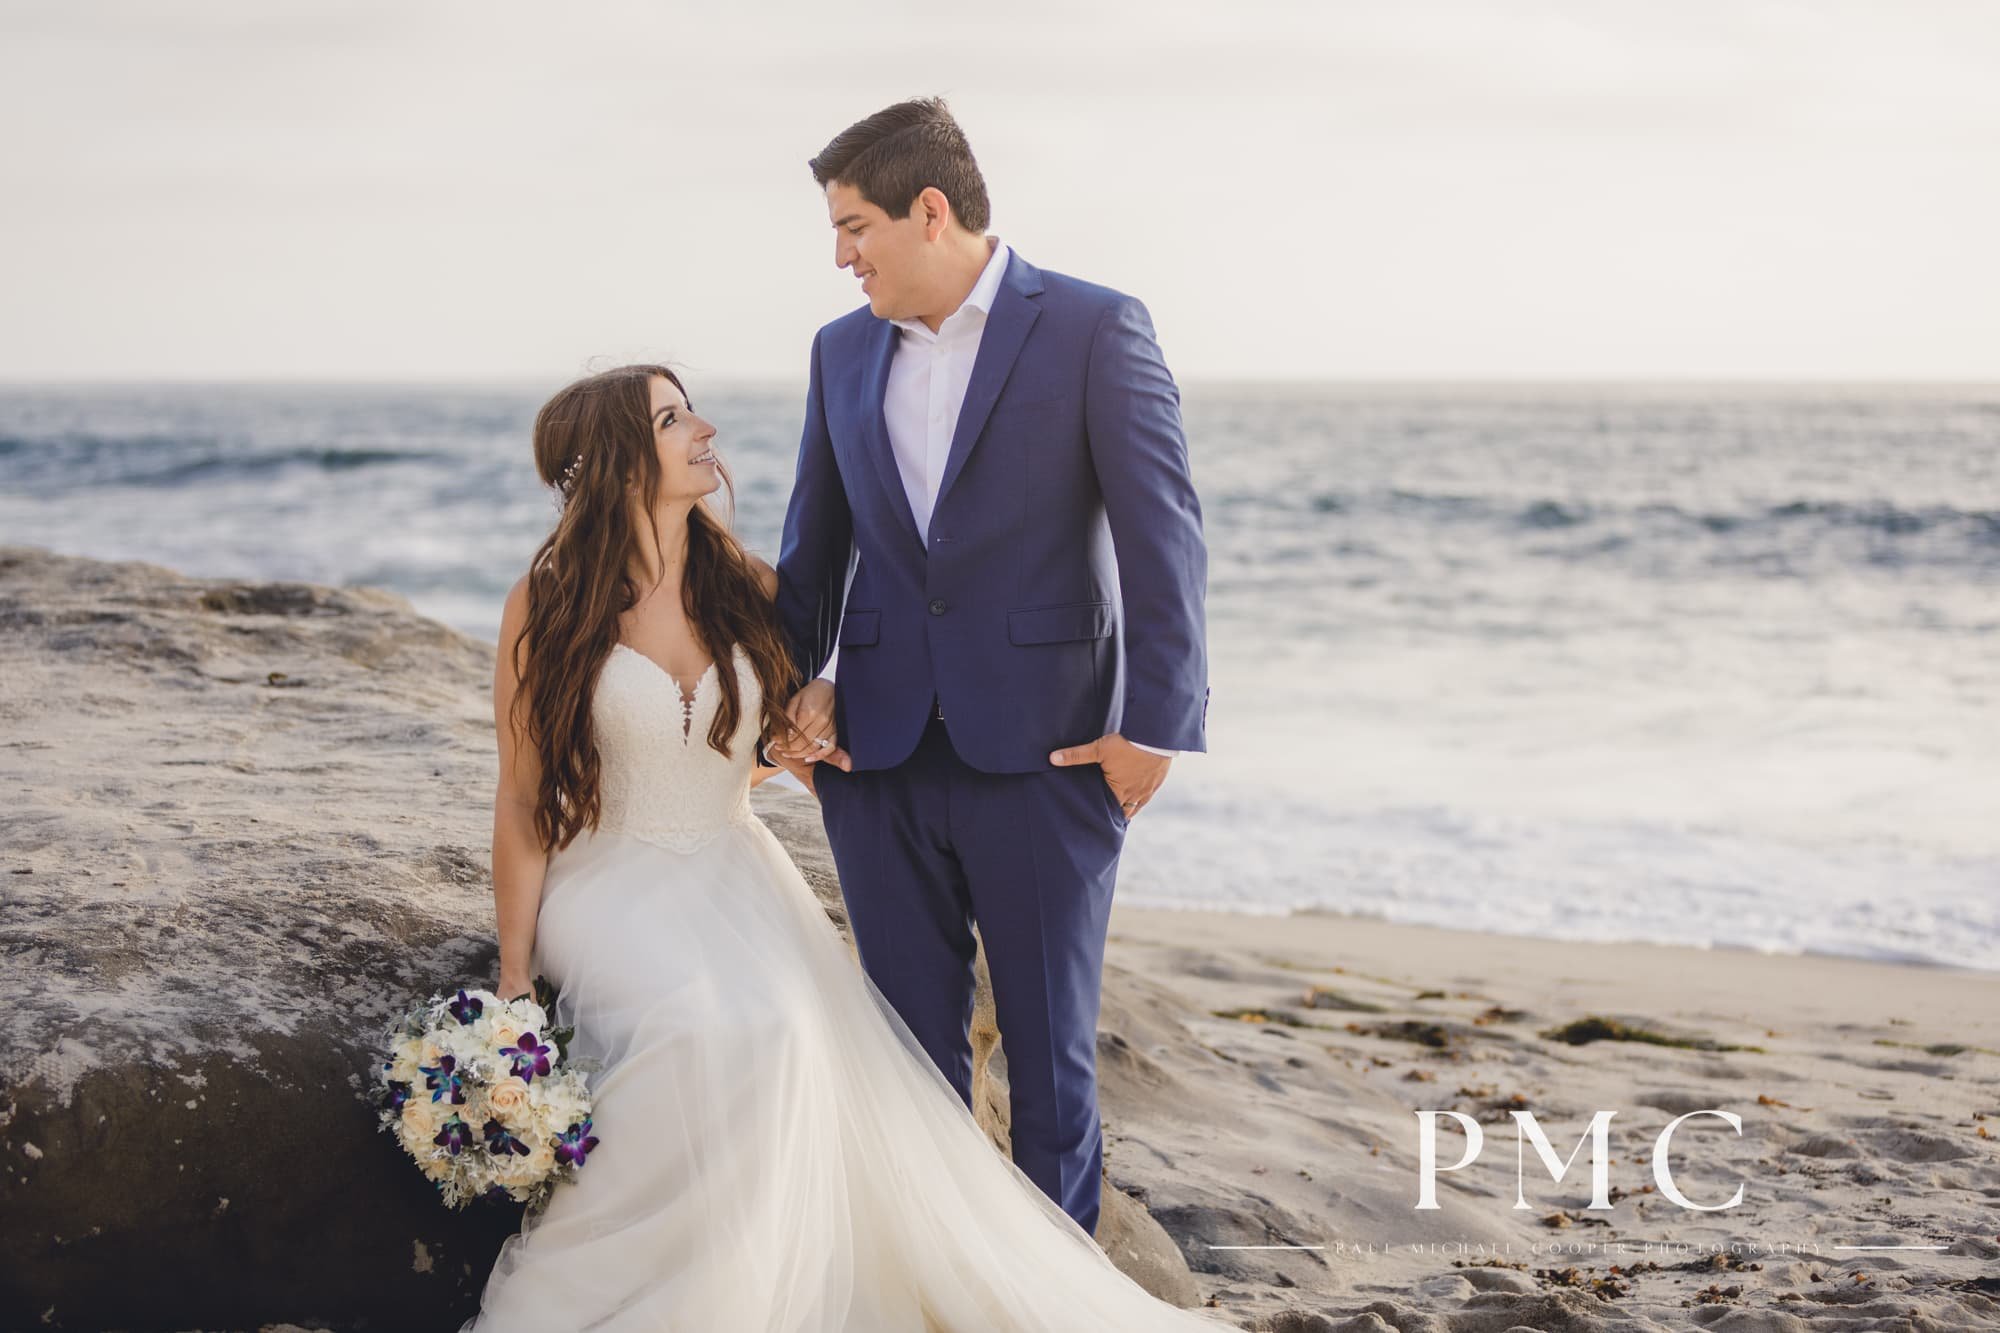 Lauren + Eli | Intimate Beach Wedding in La Jolla | San Diego, CA